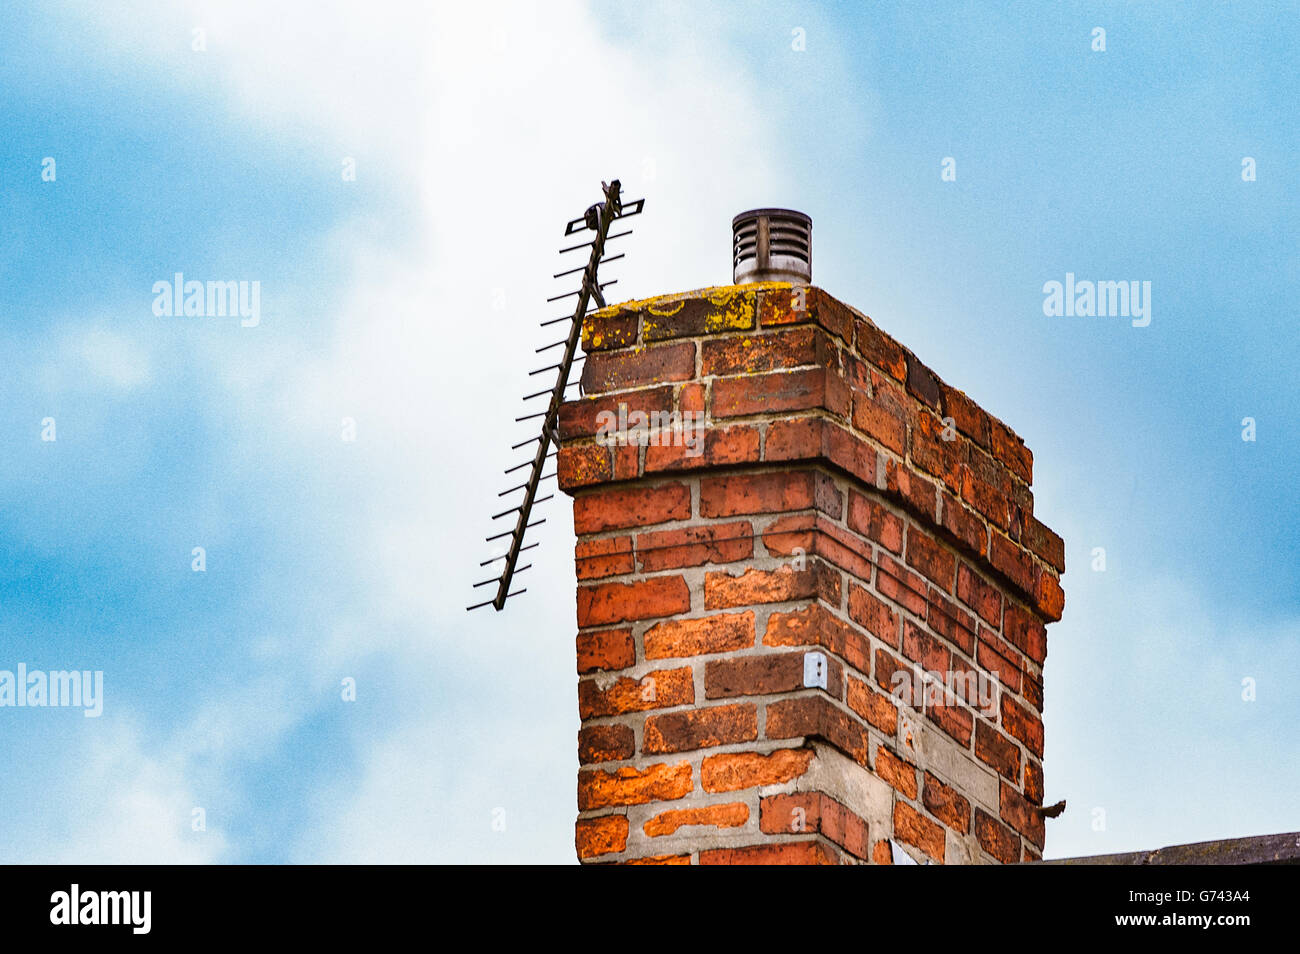 Broken TV aerial on a brick chimney against a blue sky Stock Photo